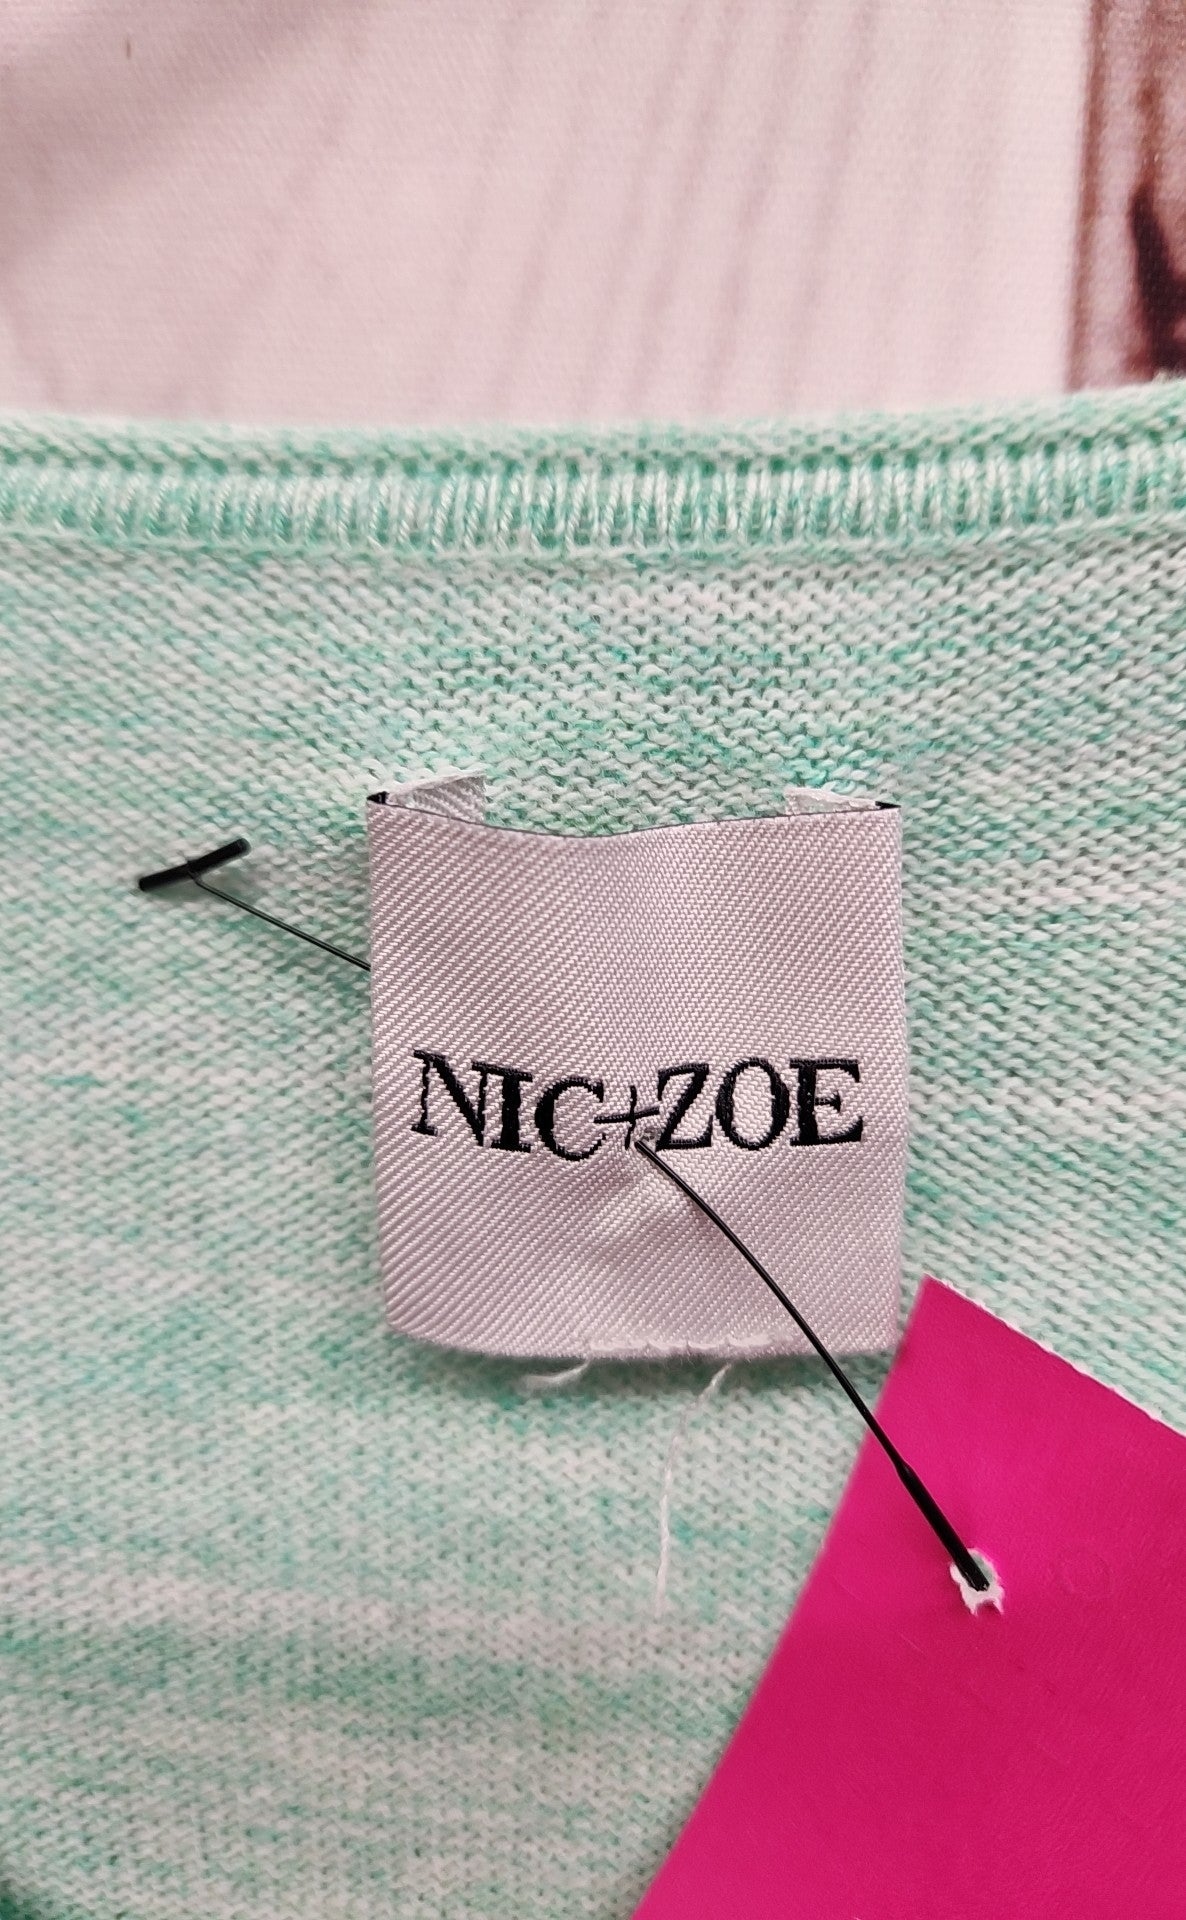 Nic & Zoe Women's Size L Green Sweater